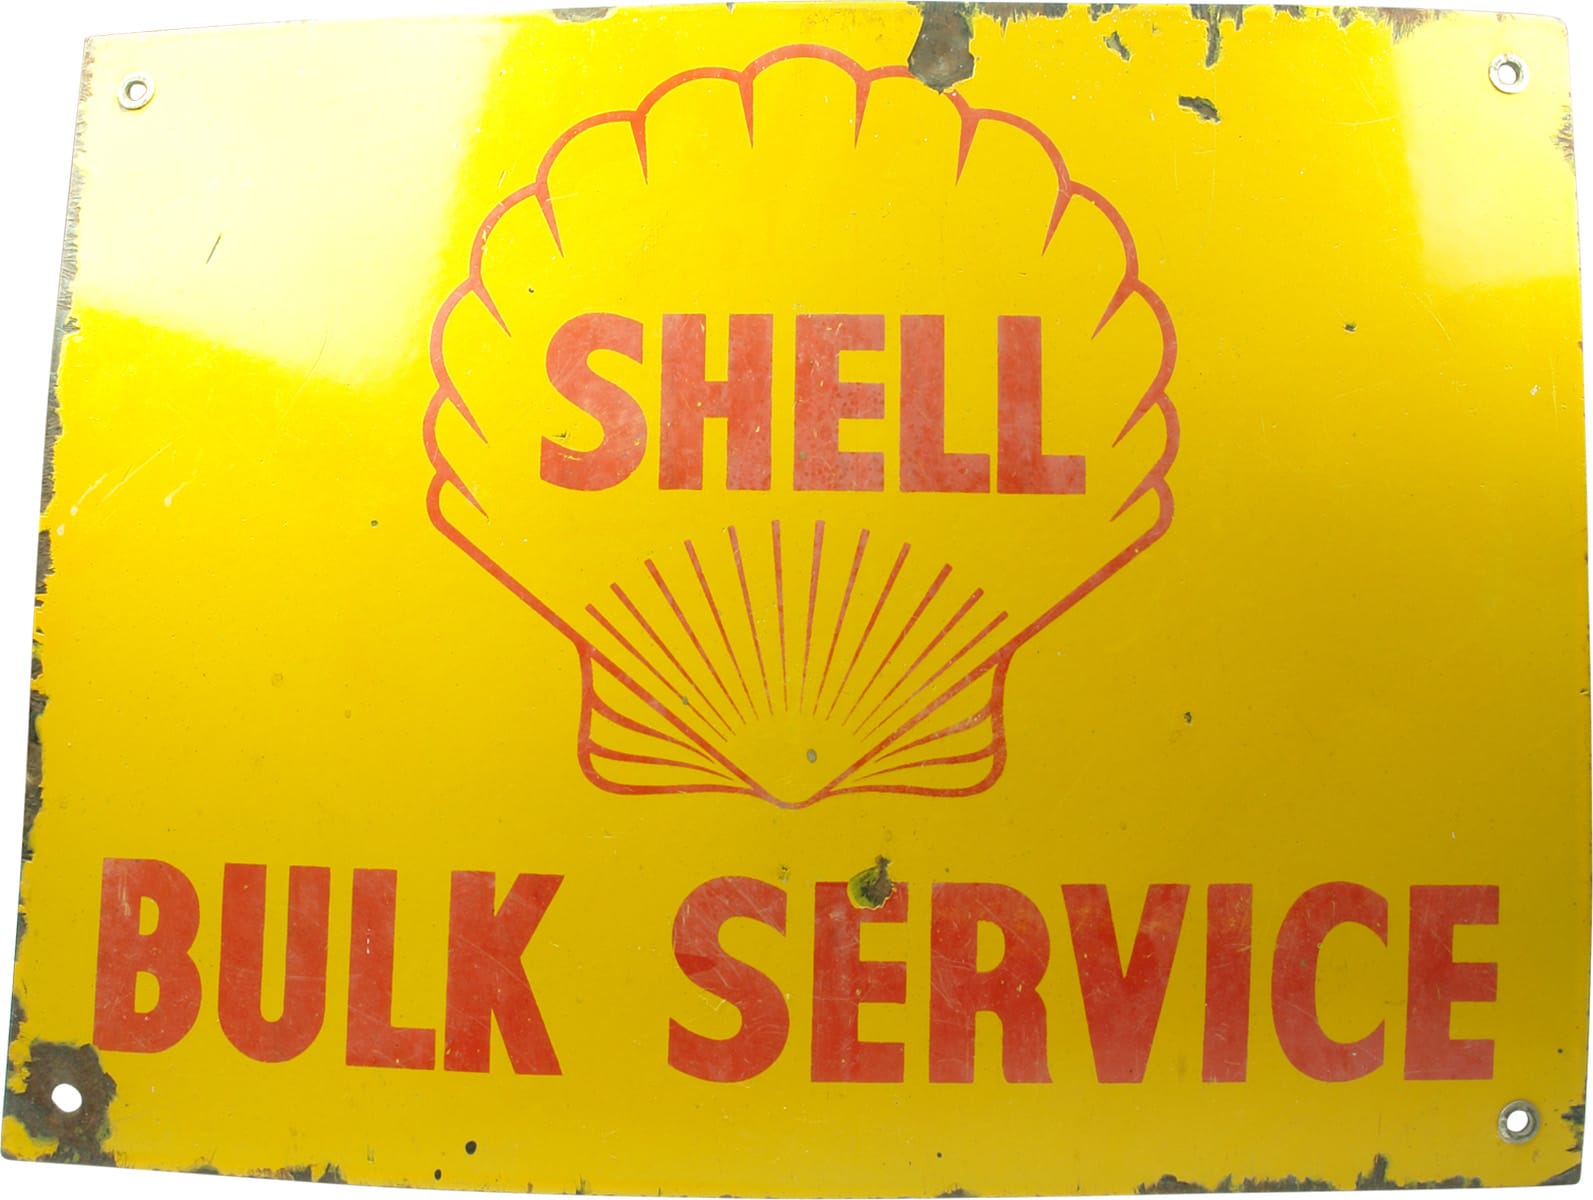 Shell Bulk Service Enamel Sign